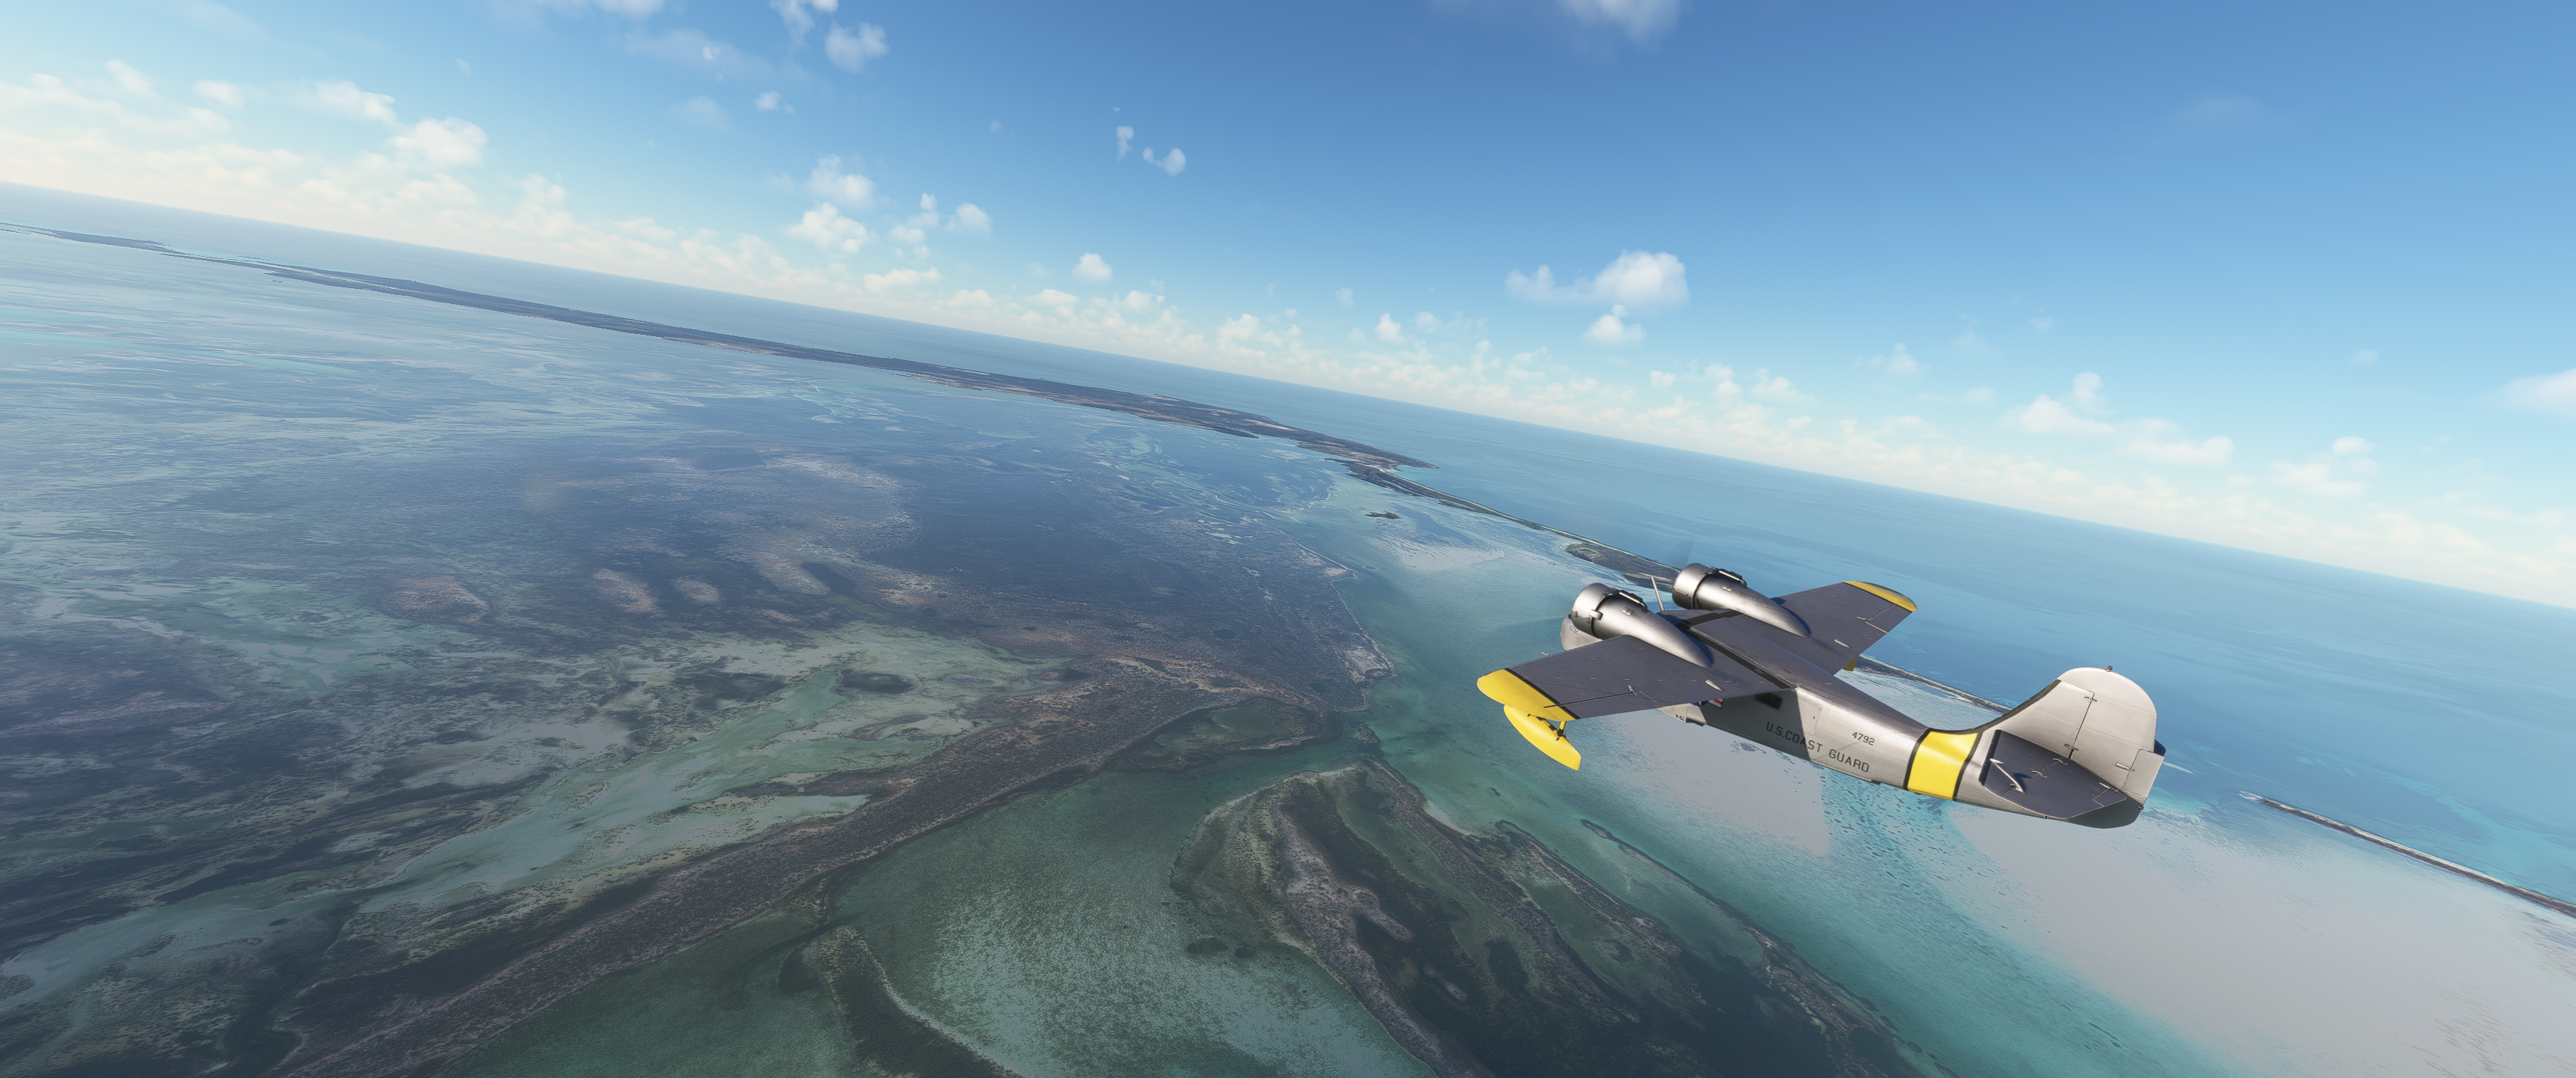 Flight Simulator Video Games Microsoft Flight Simulator 2020 3440x1440